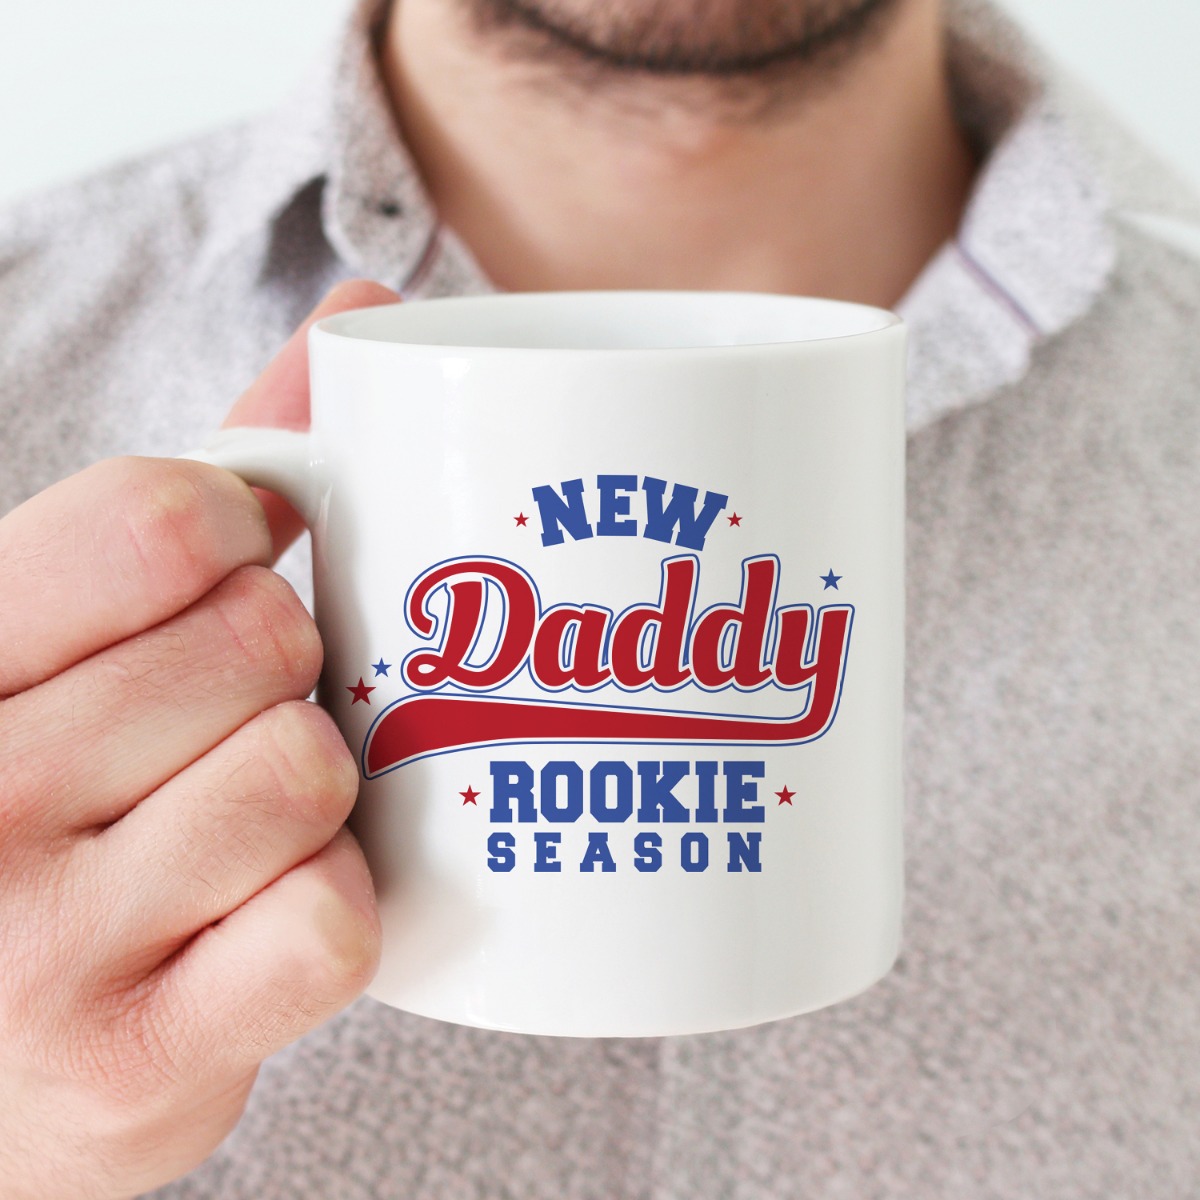 New Daddy Rookie Season Personalized Coffee Mug